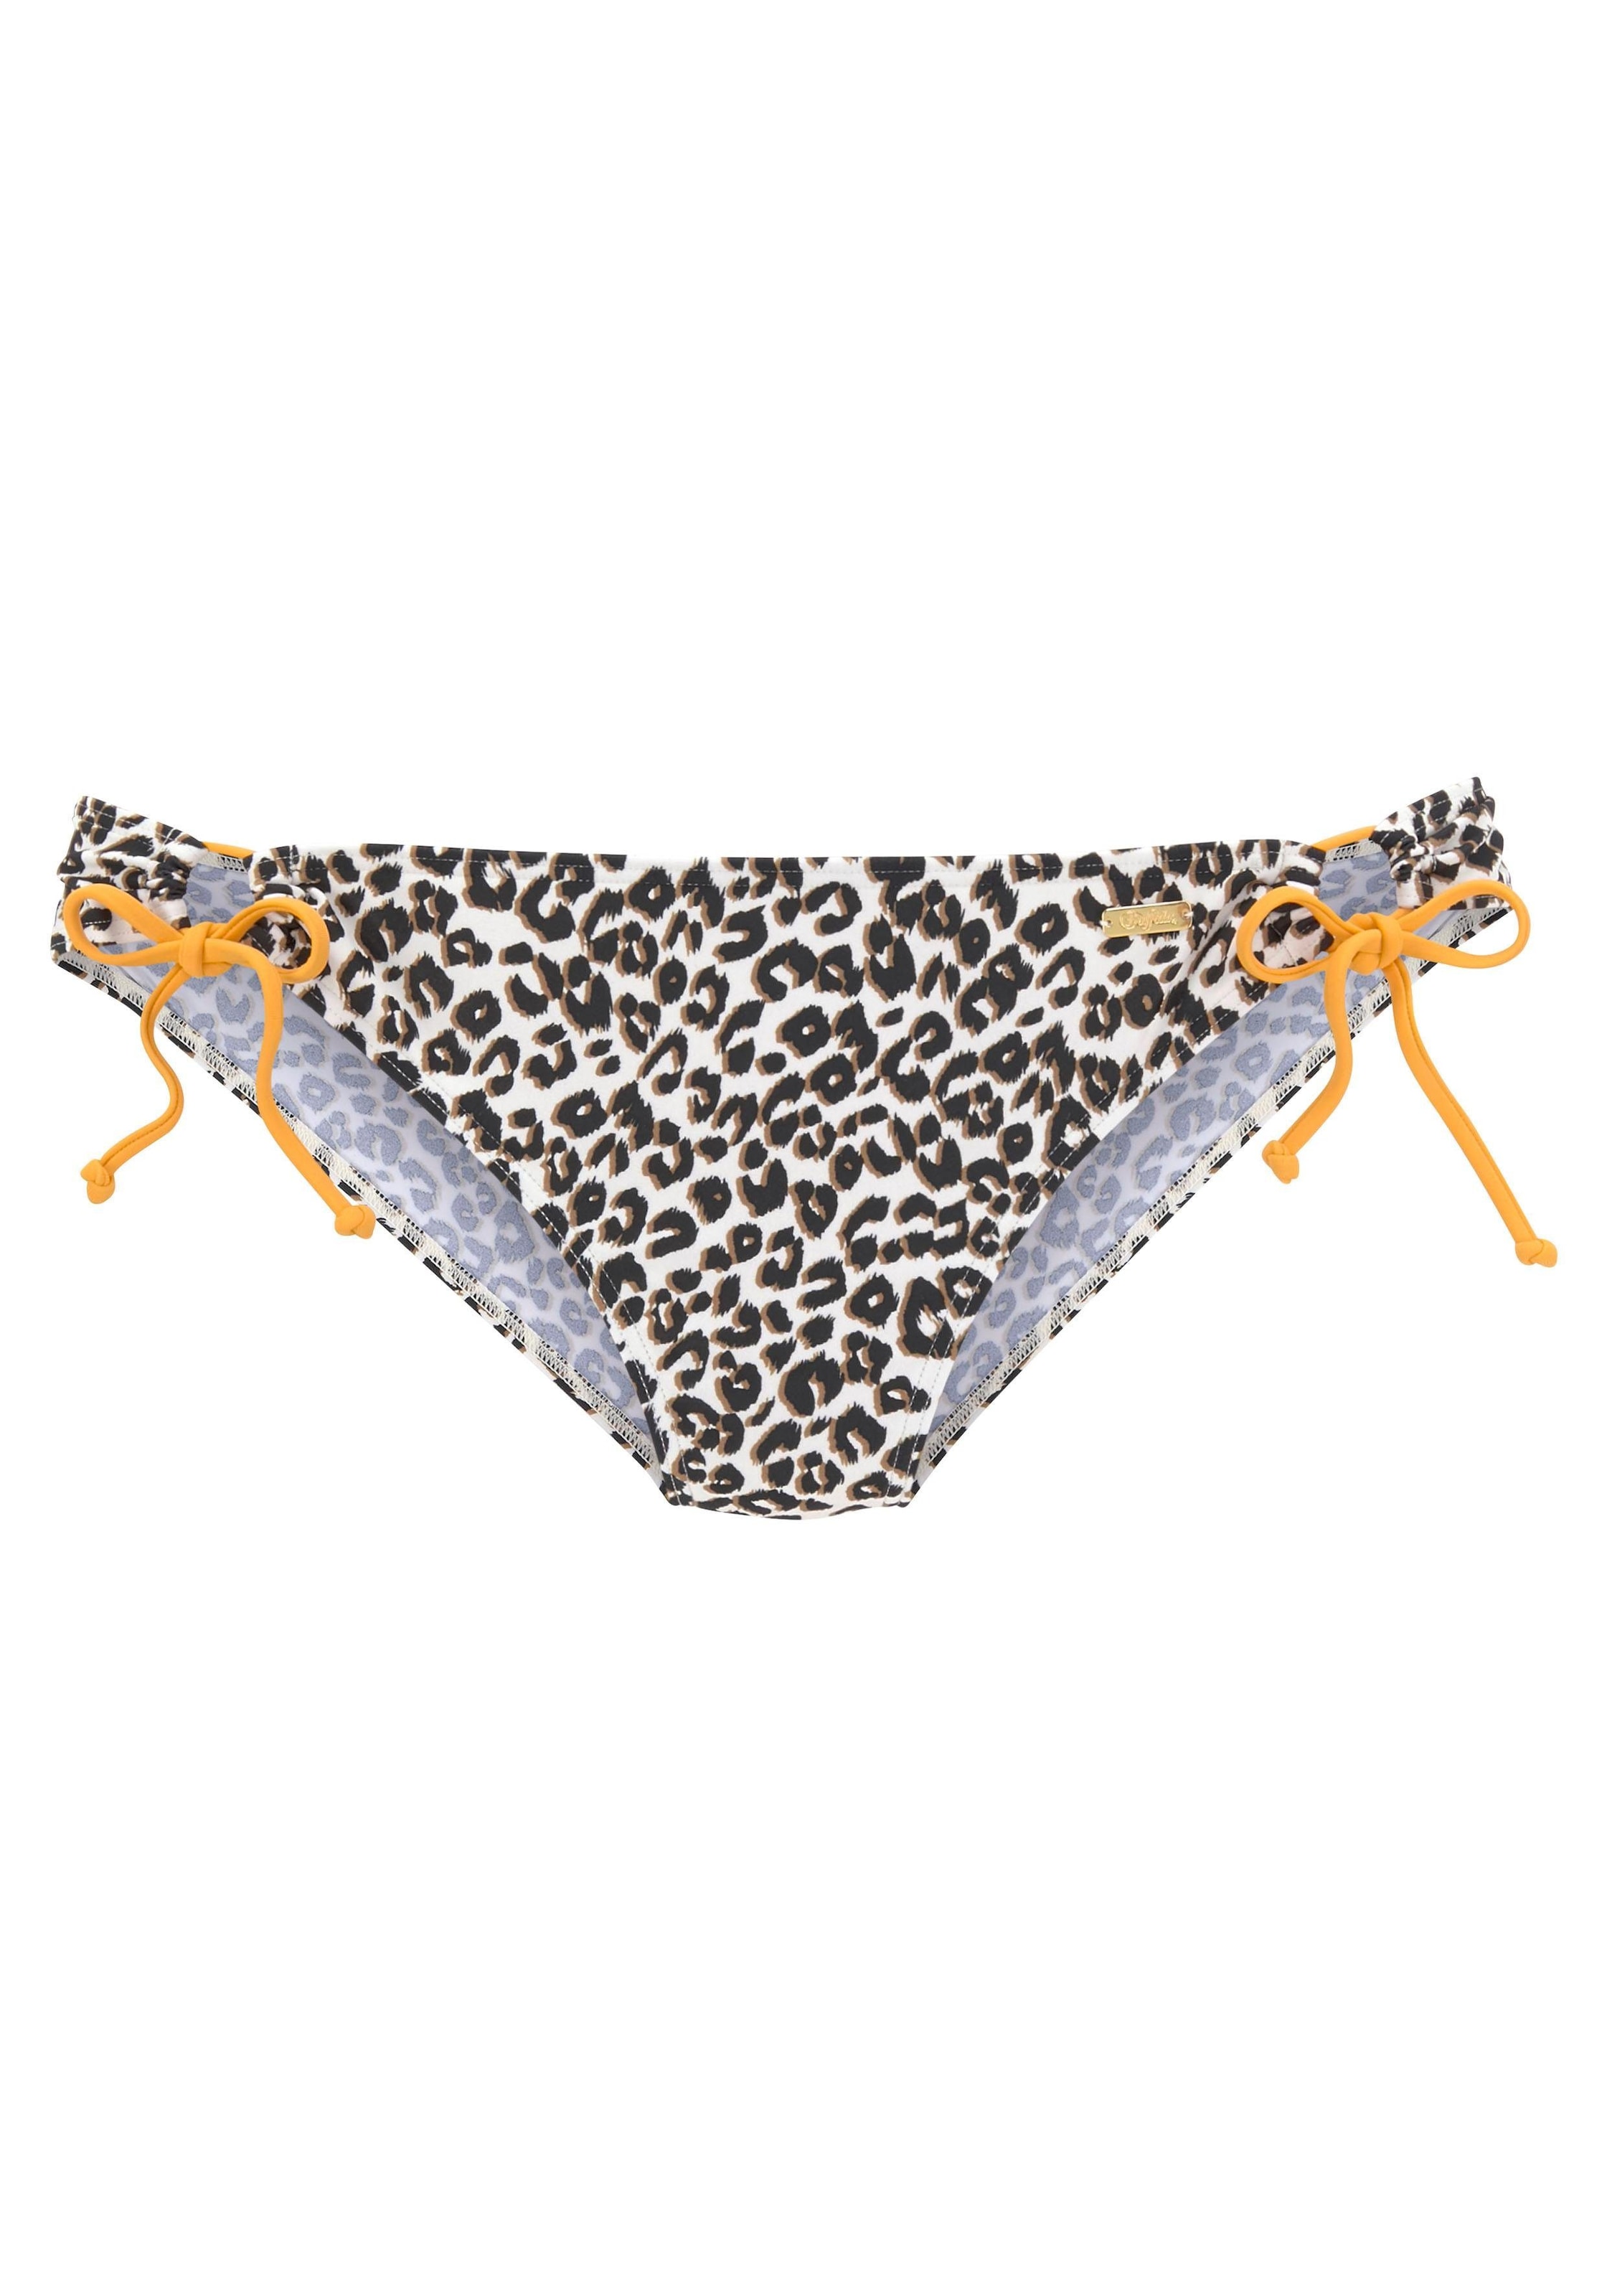 Buffalo Bikini-Hose bei Bindebändern seitlichen »Kitty«, mit